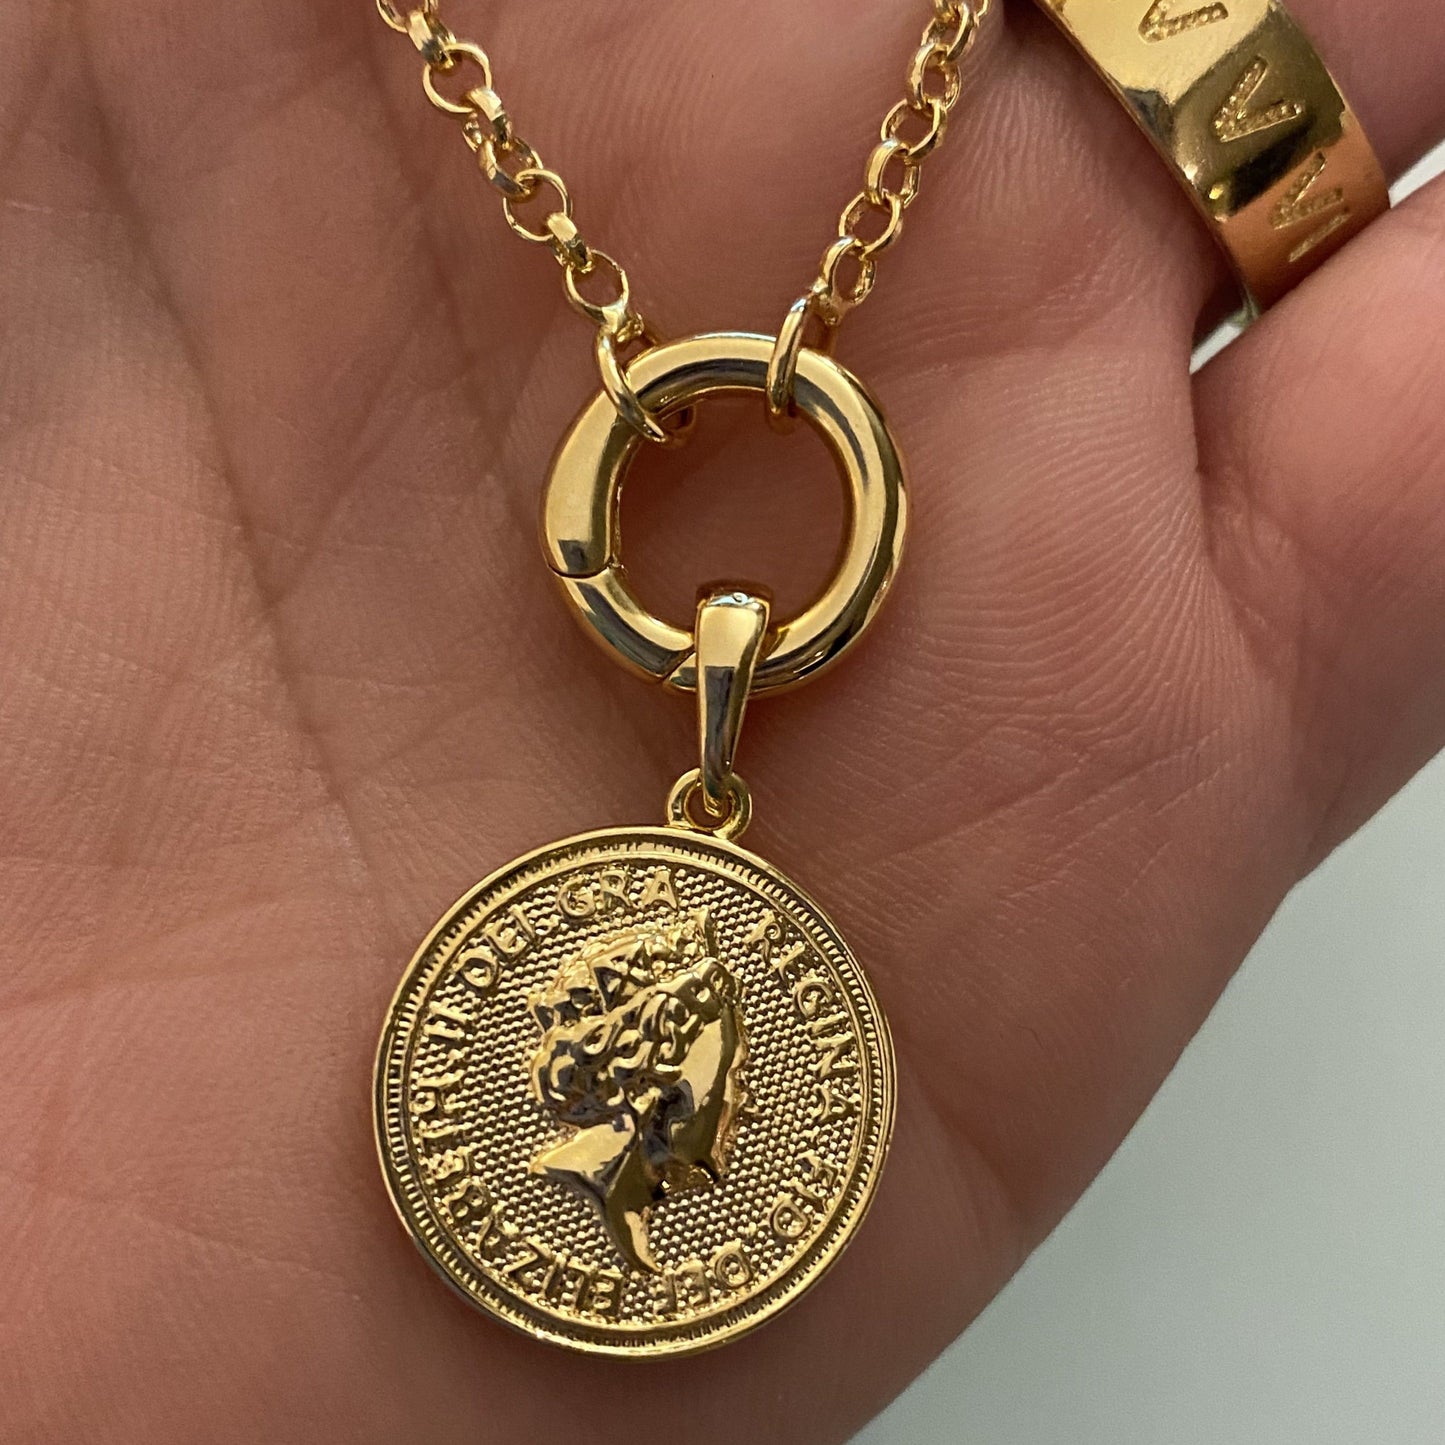 GoldFi 18k Gold Filled Queen Elizabeth Coin Pendant